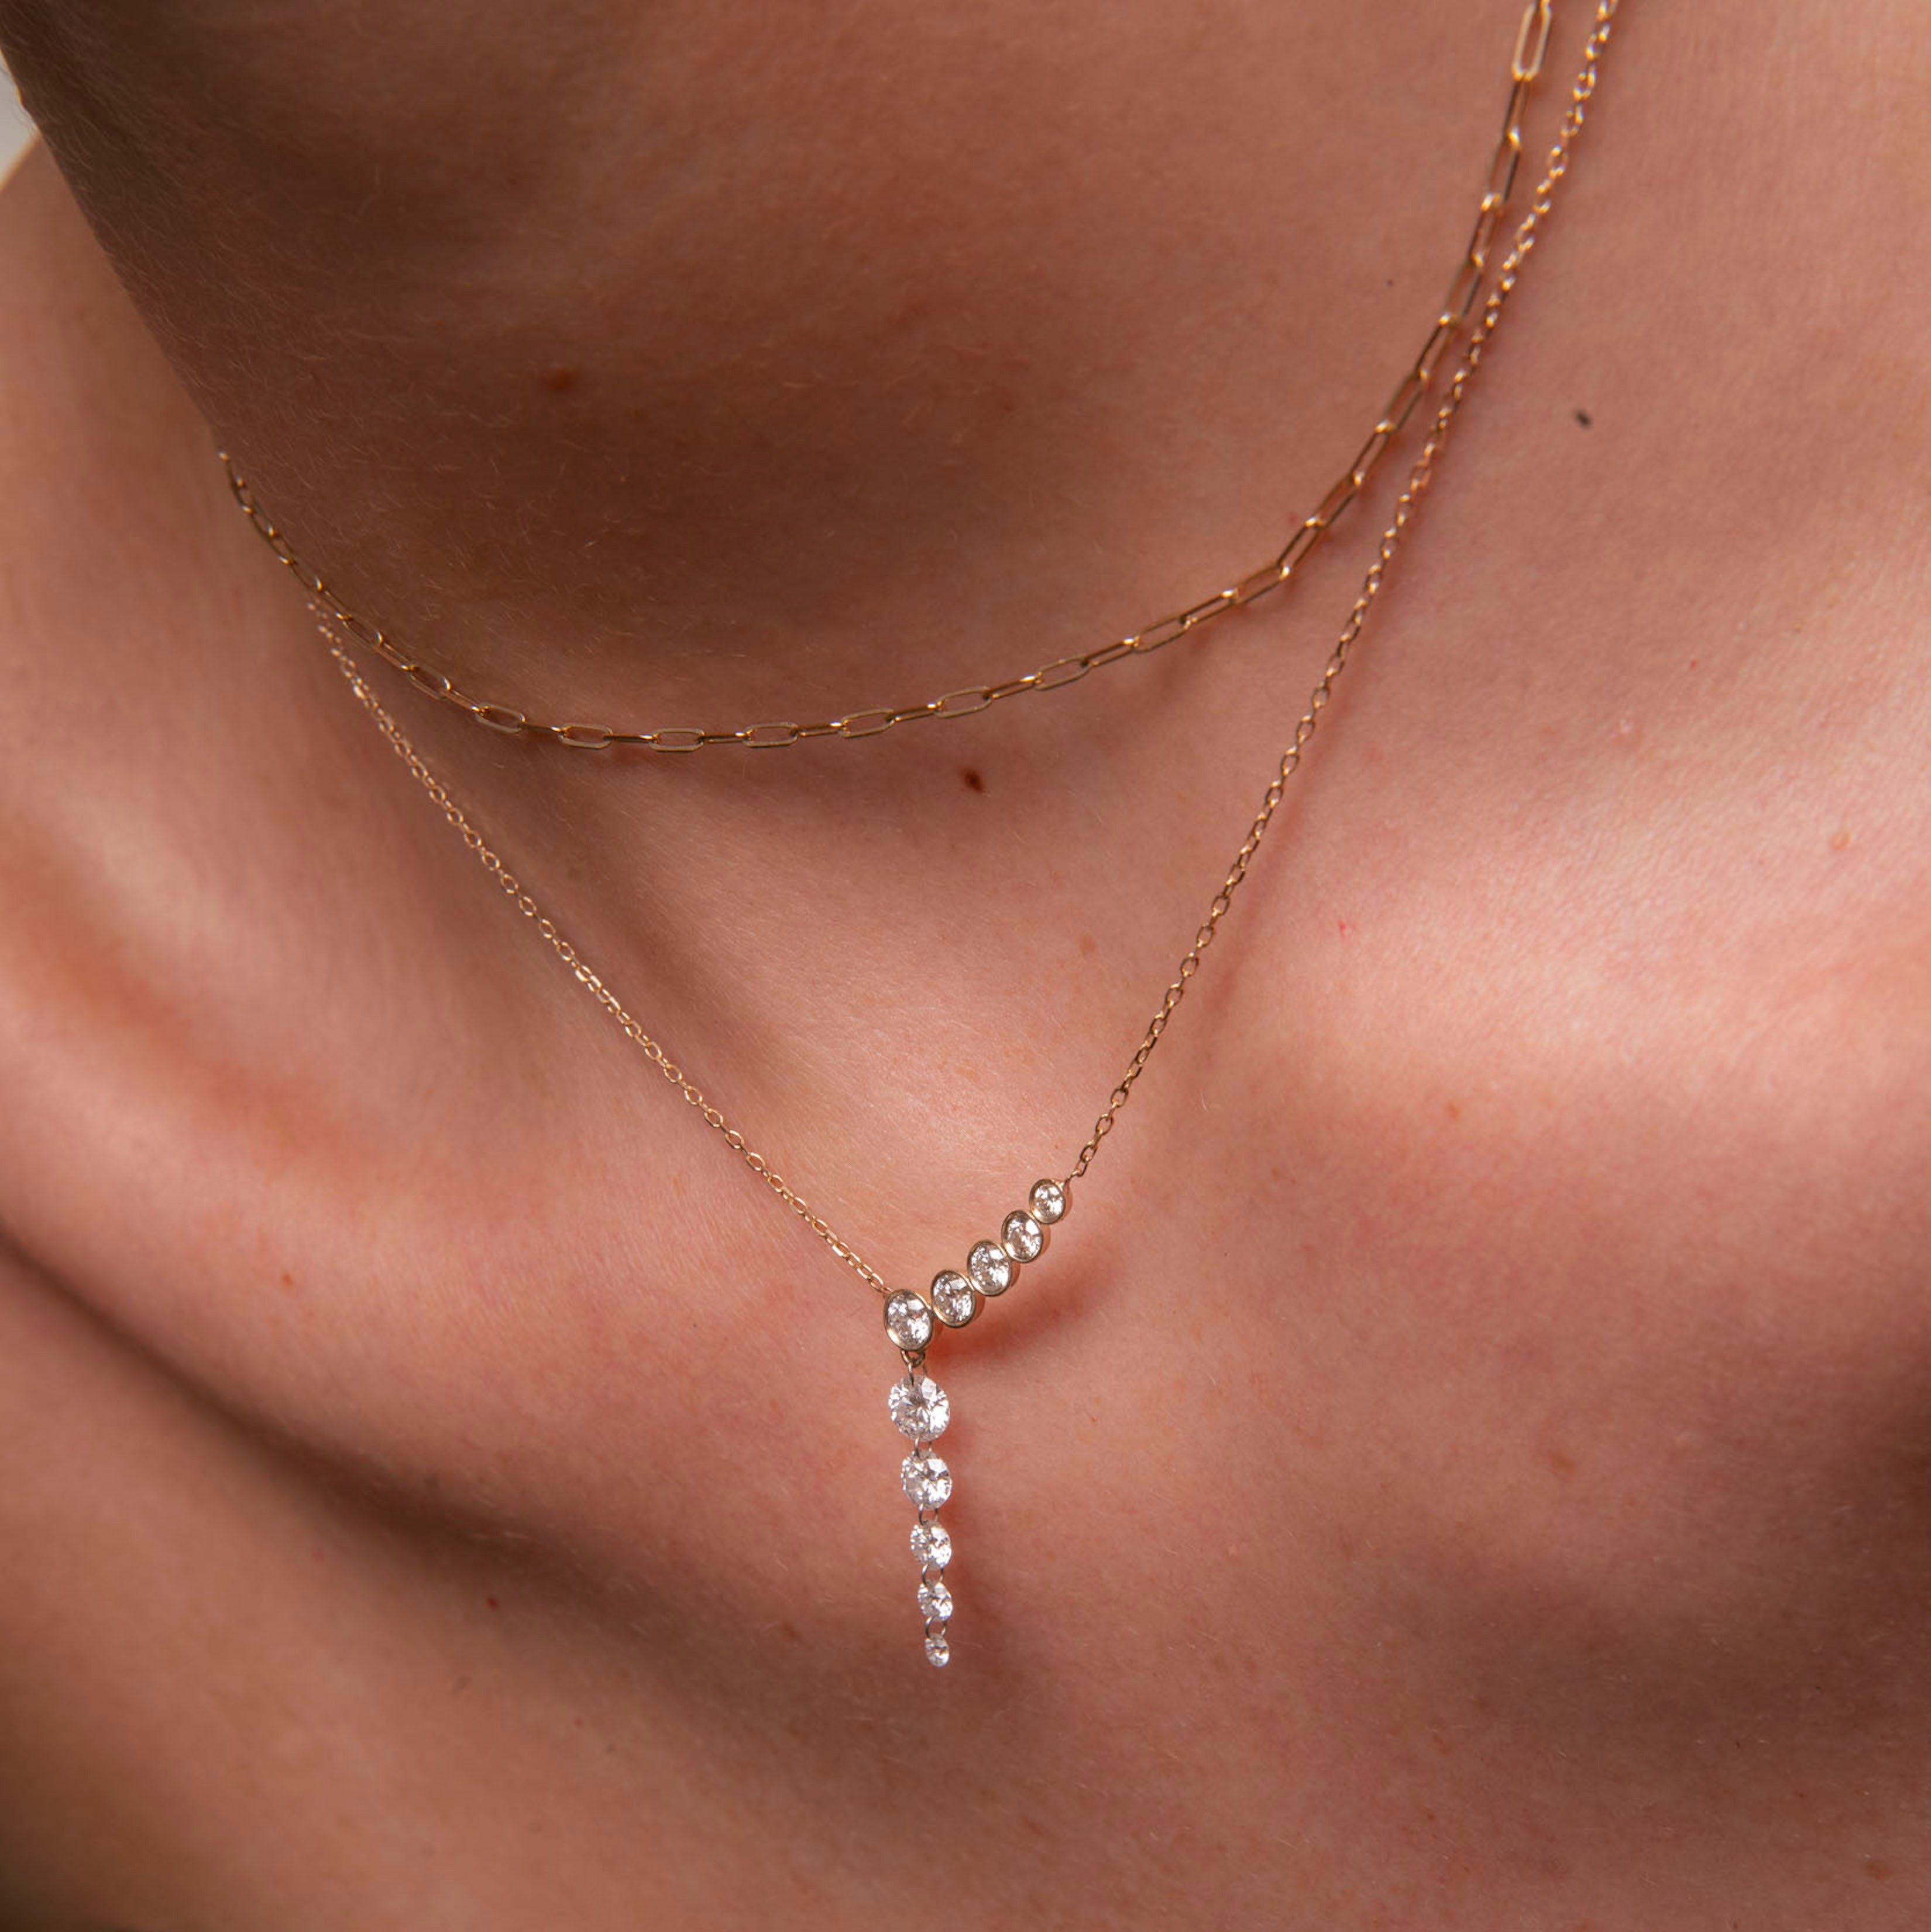 .92ct Le Vian Chocolate Diamond 14k Strawberry Gold Pendant Necklace